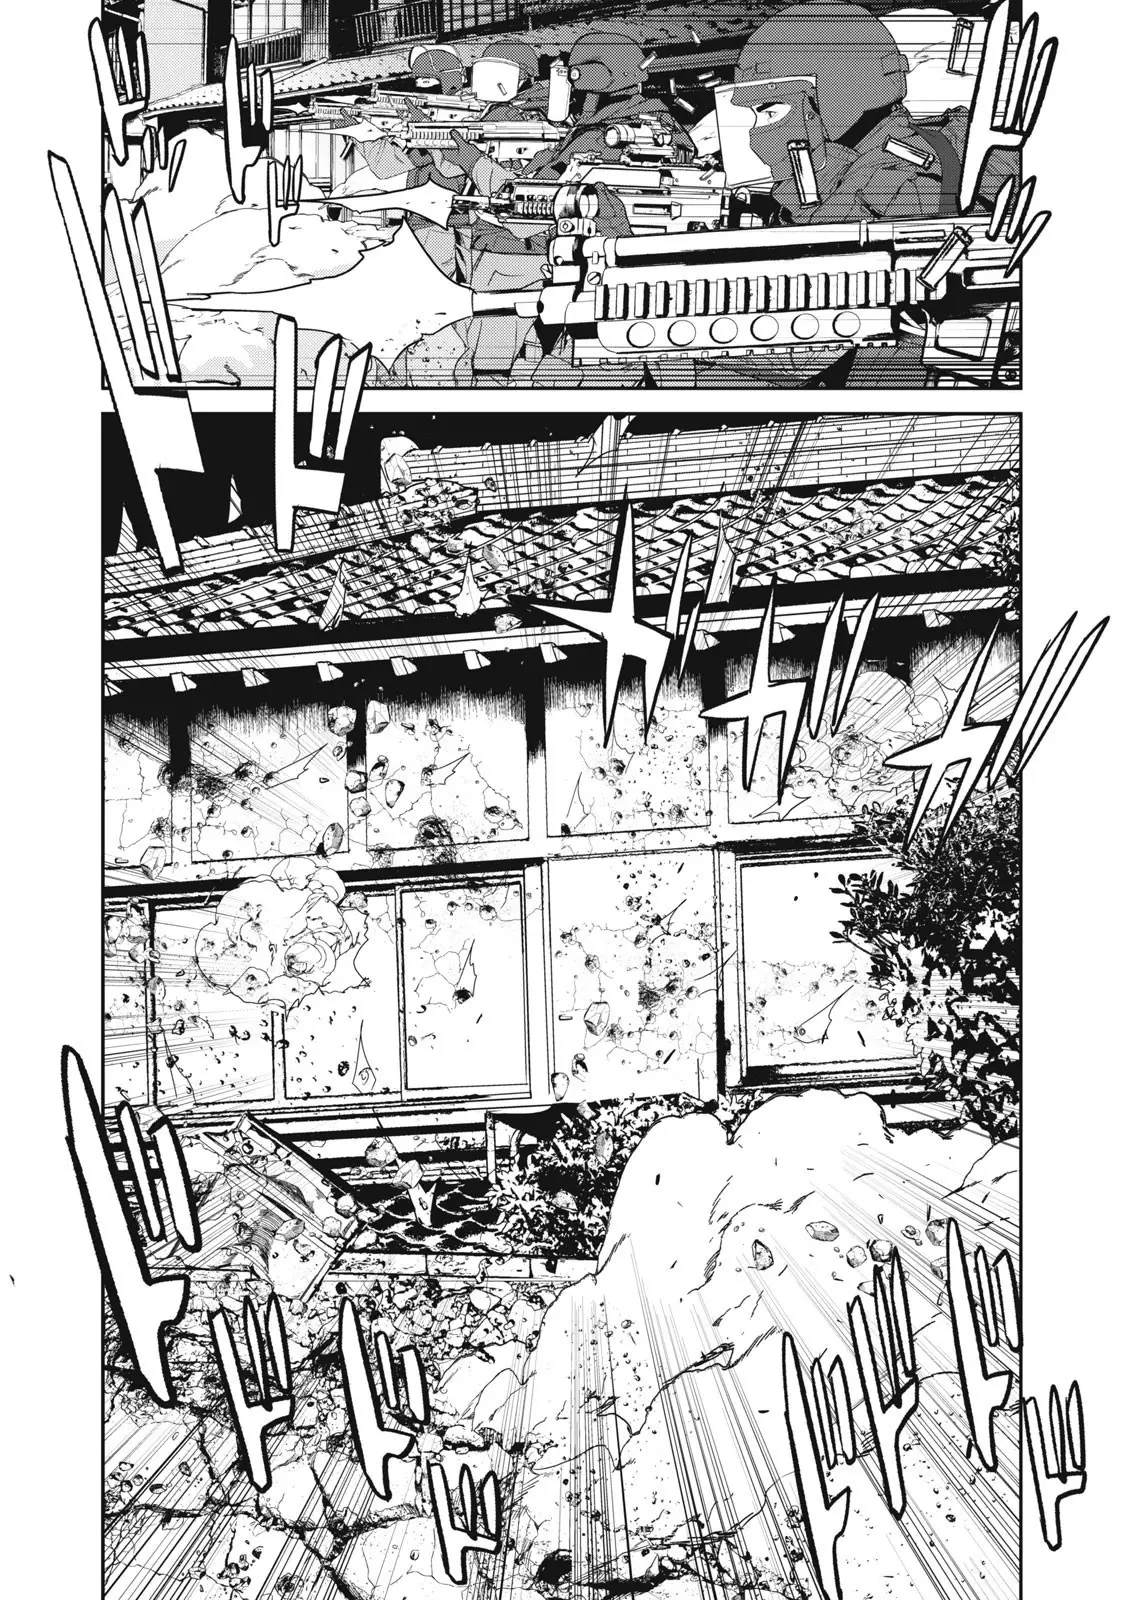 Shokuryou Jinrui Re: Starving Re:velation - 45 page 7-1496a535